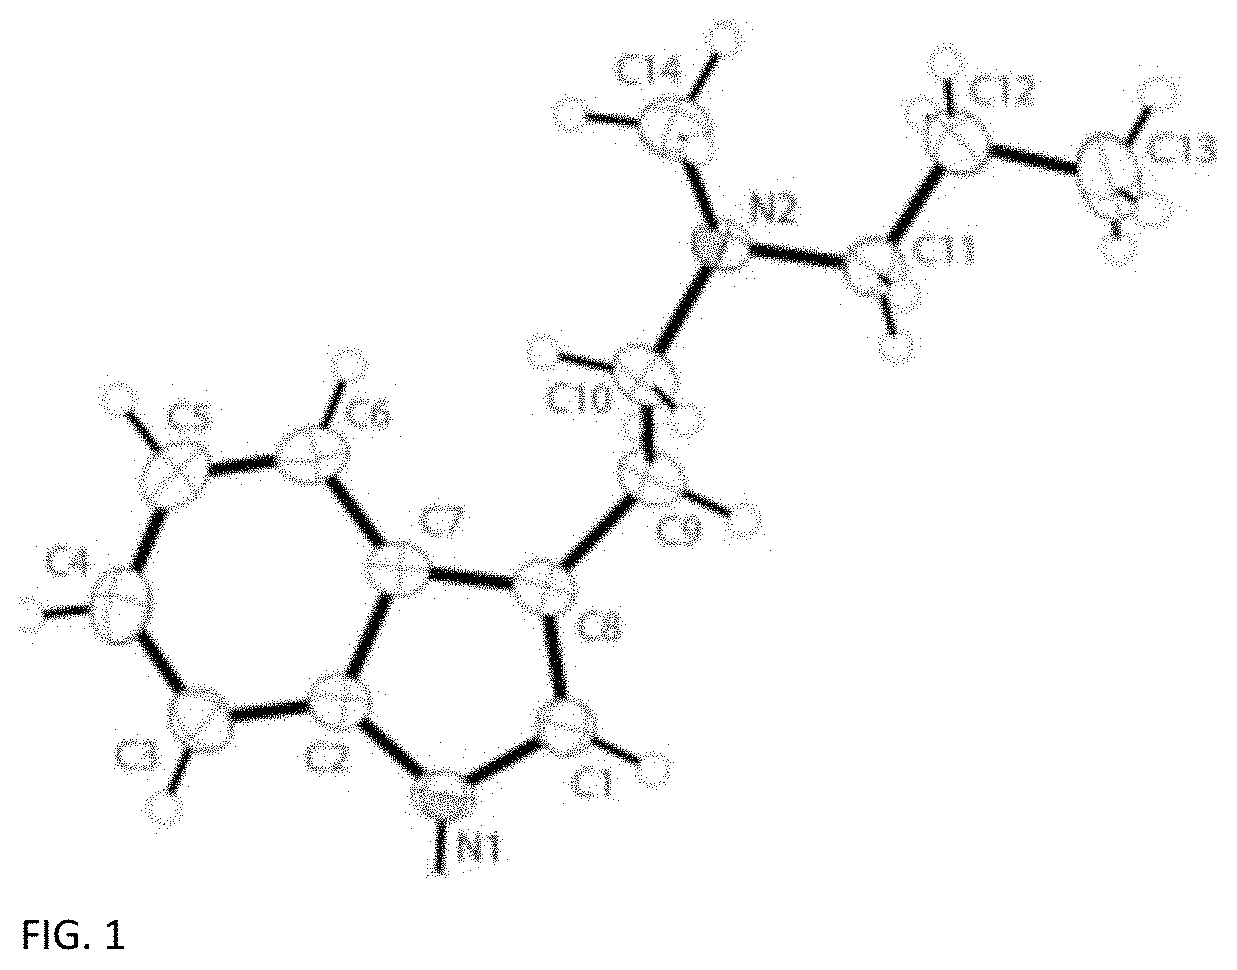 Crystalline n-methyl tryptamine derivatives